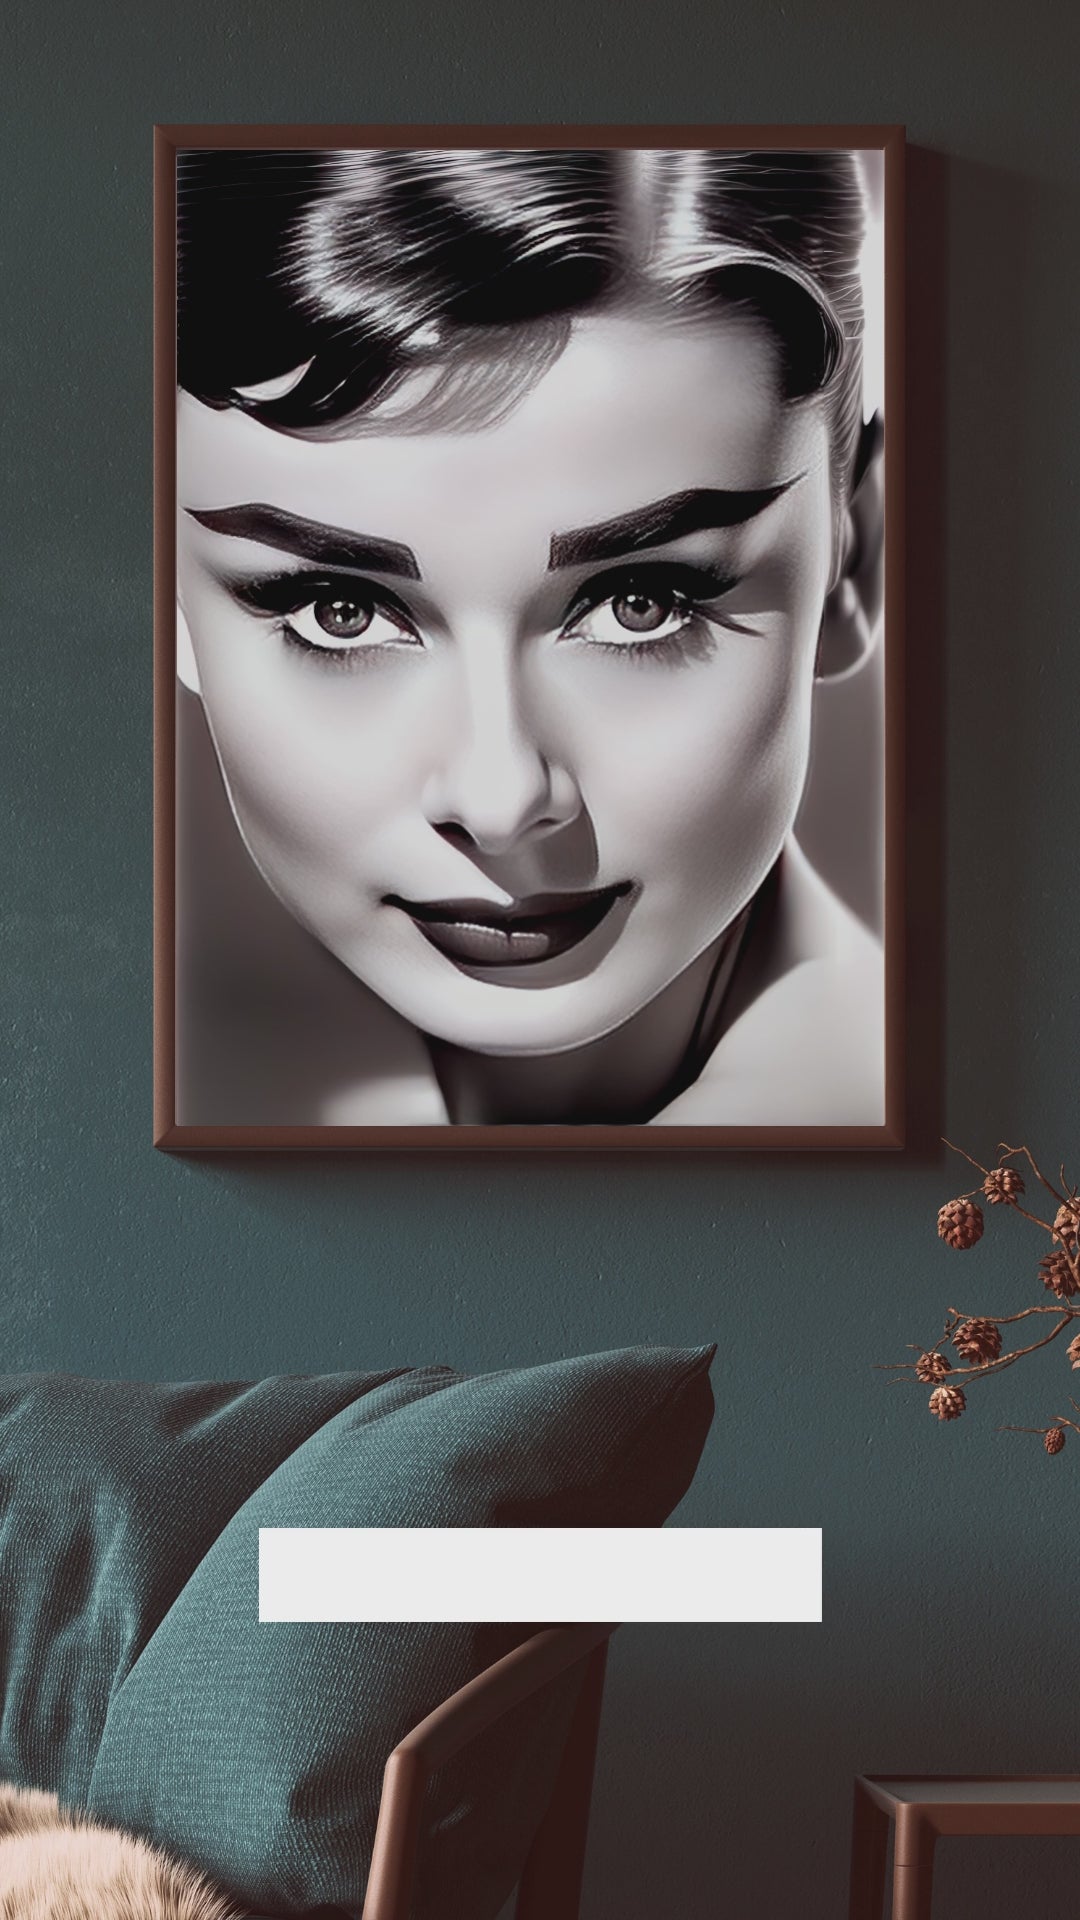 Digital Art Print: Graphite Glimpse: Audrey's Enigmatic Essence - Digital Audrey Hepburn Art Collective, closeup face, timeless portrait, fashion art, monochrome painting, decor, gift, museum, gallery showcase, corporate art, office art